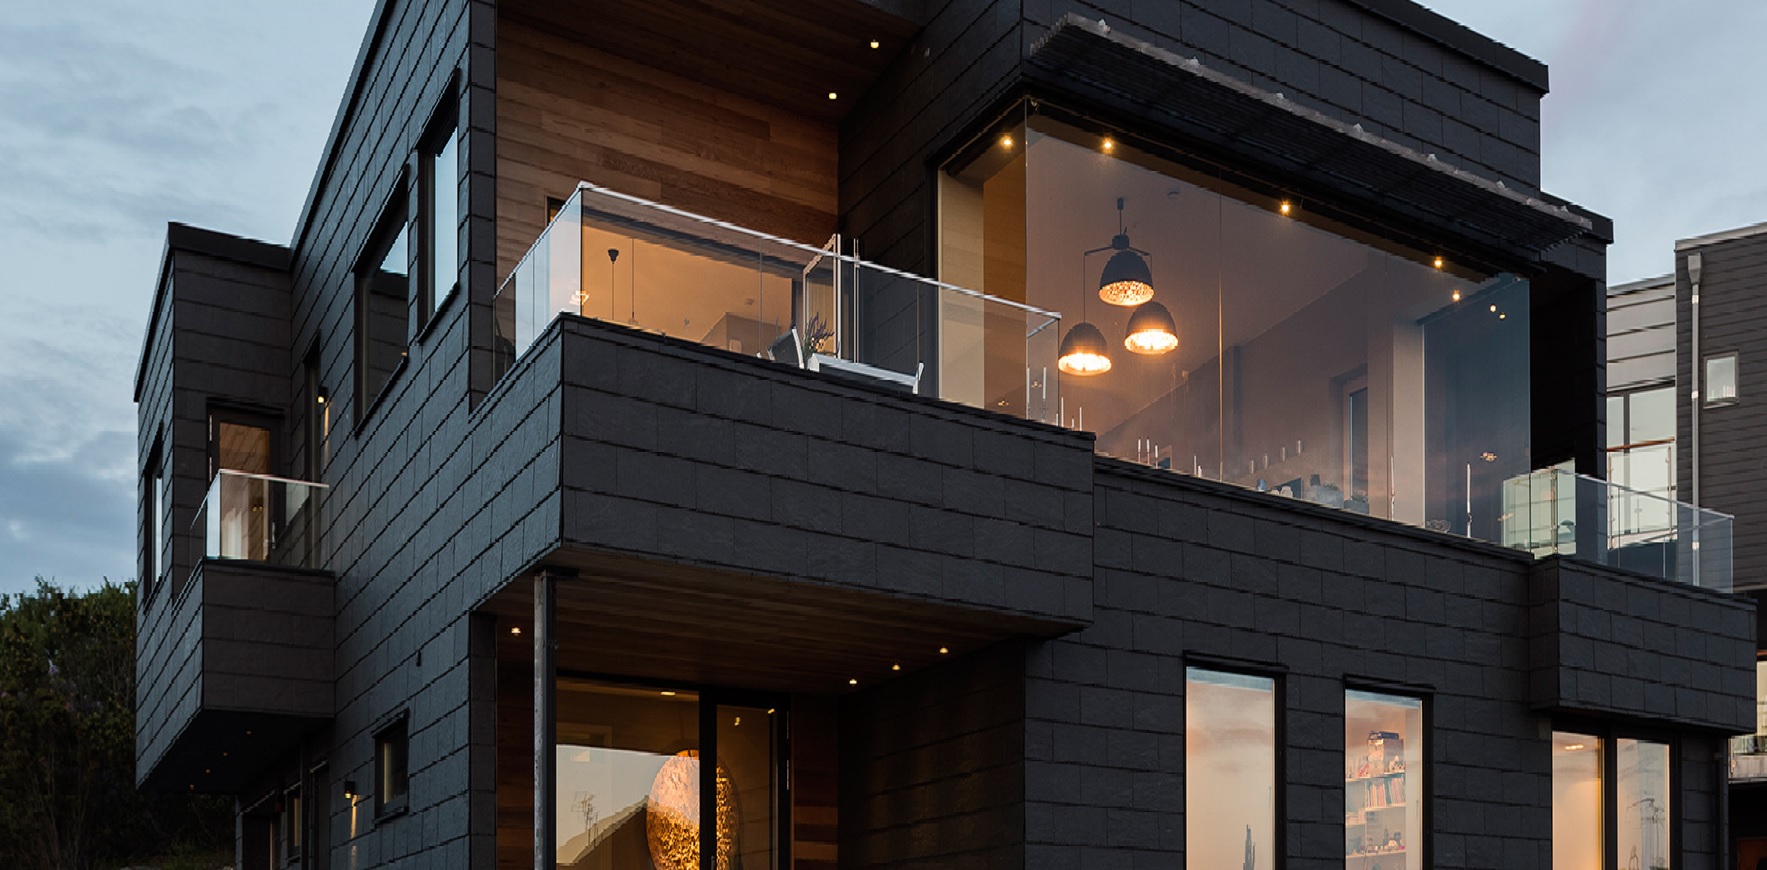 Slate facade - the future of modern architecture